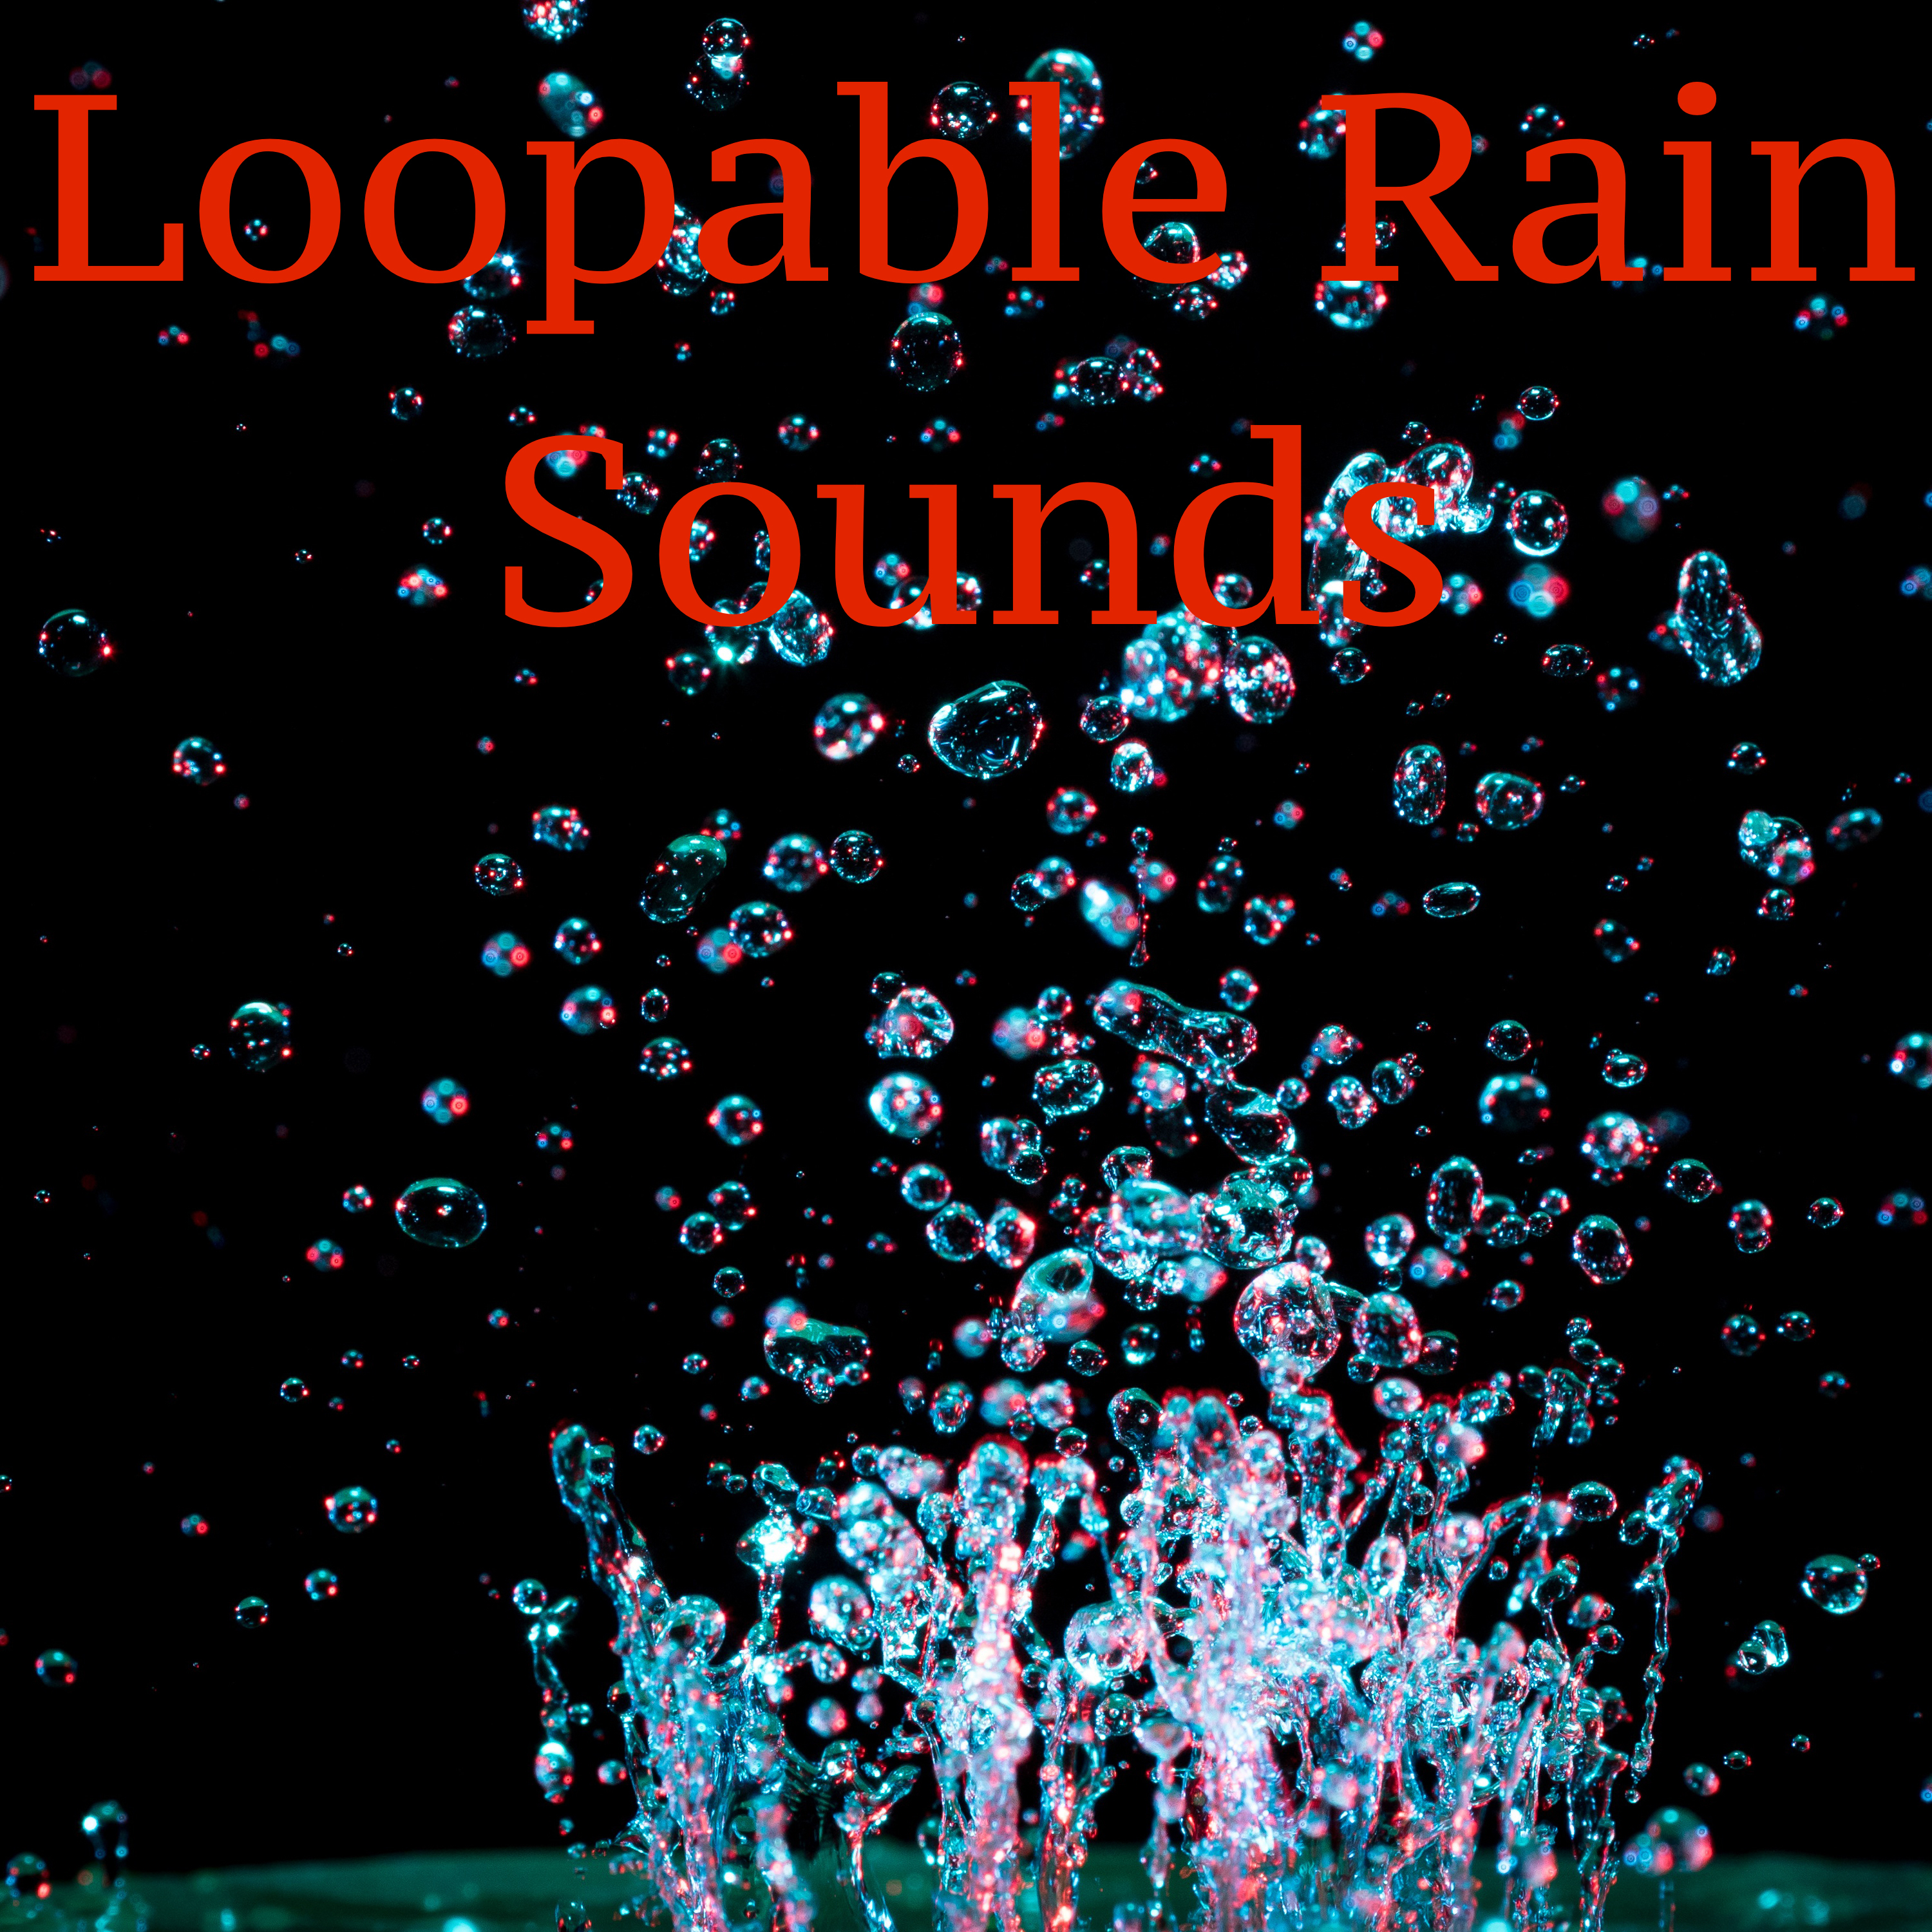 Exam Revision Rain Sounds, Revision Music Rain Sounds, 1 Hour Rain Sounds, Loopable Rain Compilation for Meditation